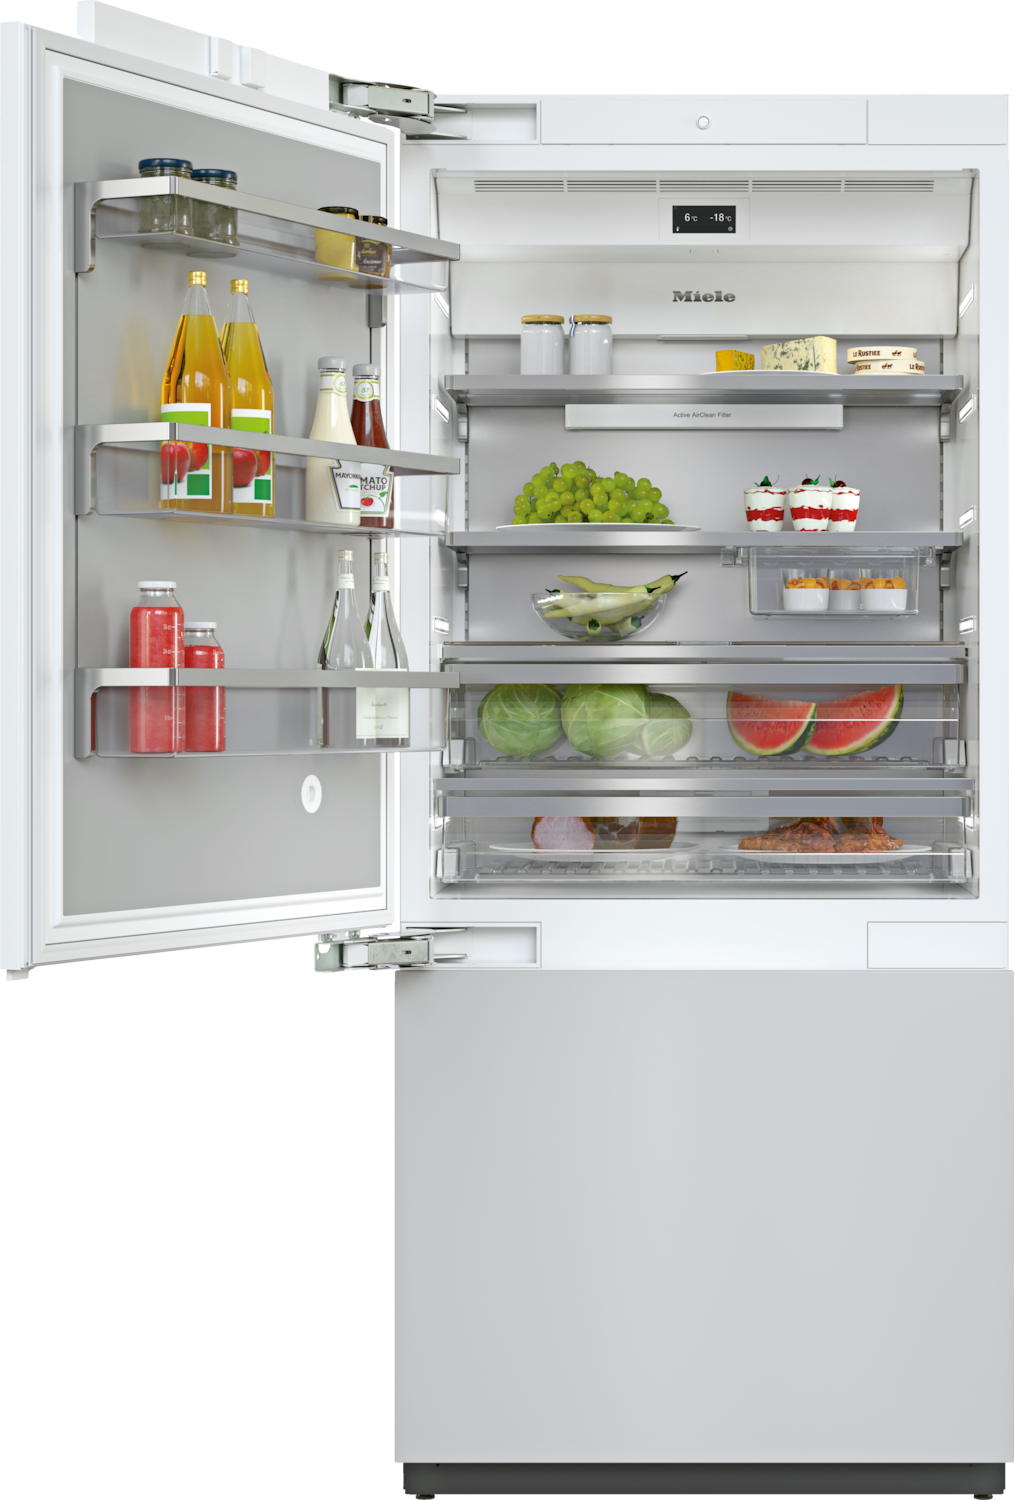 KF 2911 Vi MasterCool fridge-freezer product photo